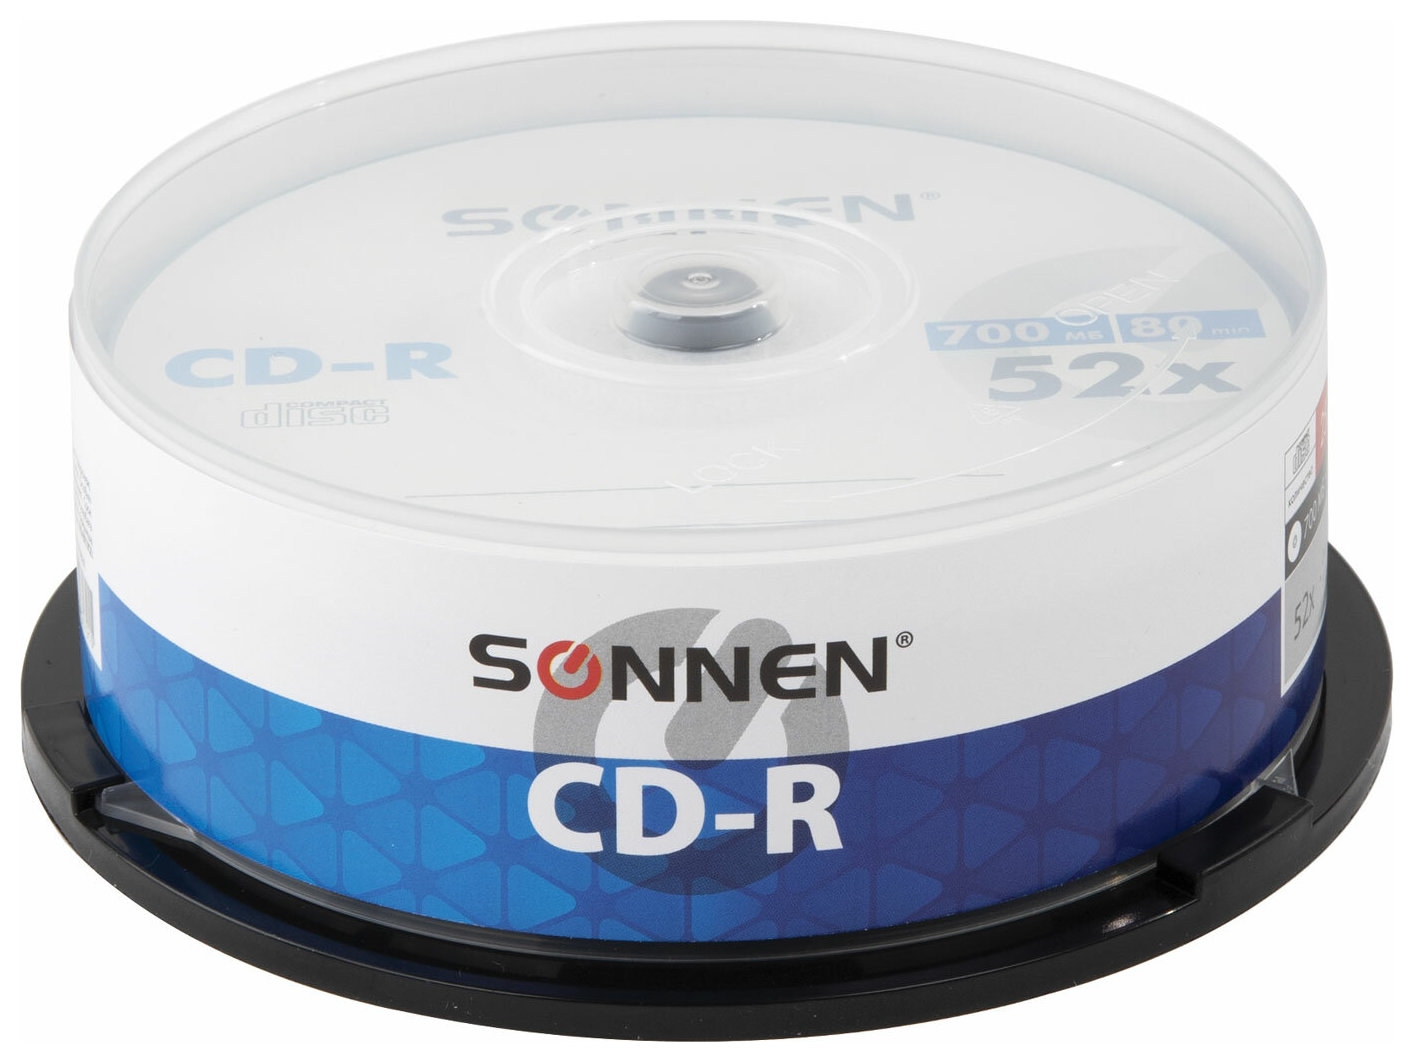 Диски Cd-r Sonnen, 700 Mb, 52x, Cake Box (Упаковка на шпиле) комплект 25 шт., 513531